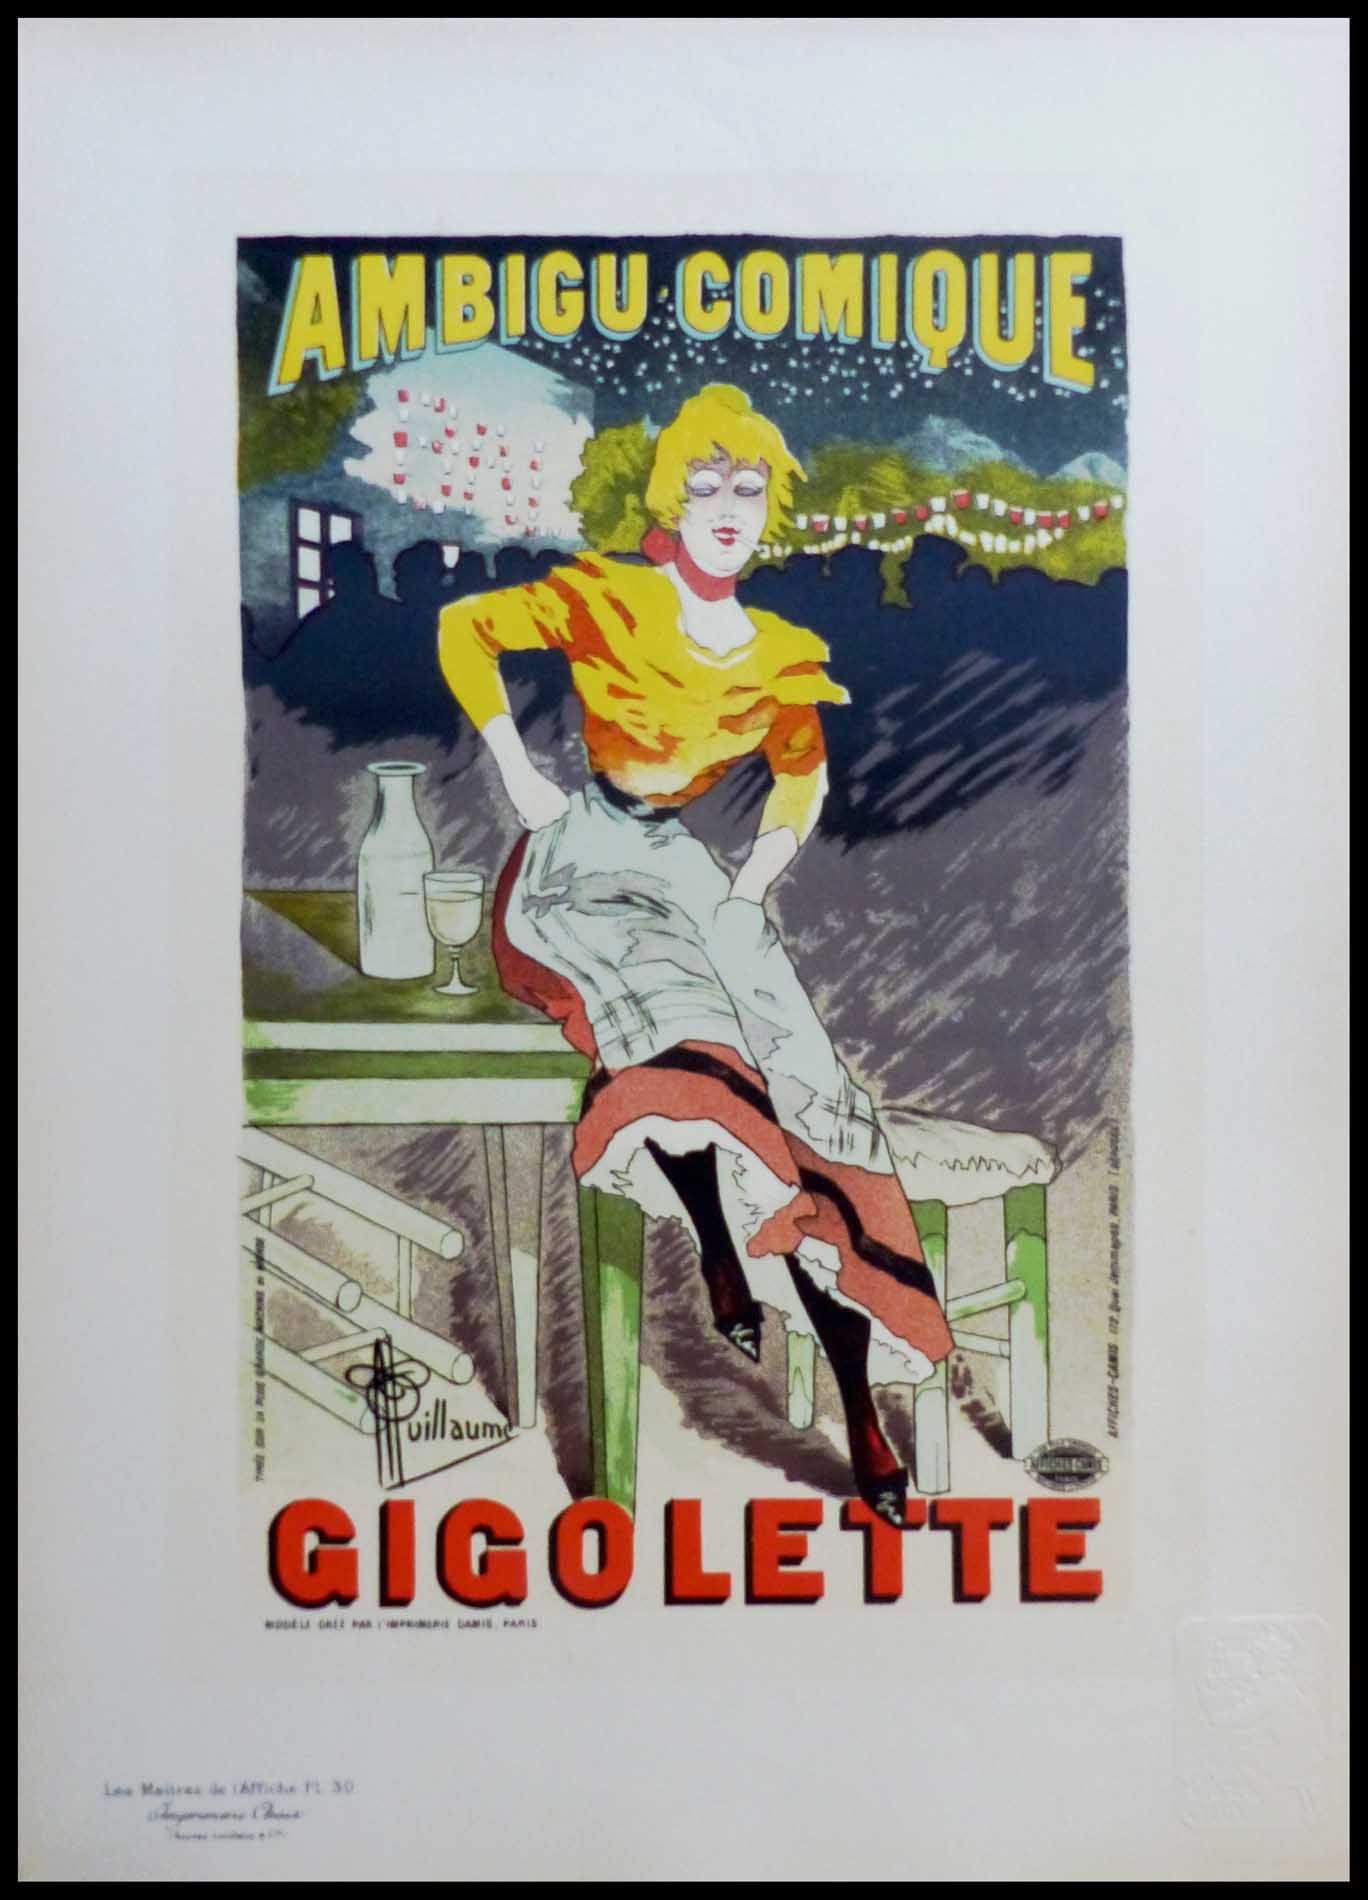 A. GUILLAUME 阿尔伯特-吉约姆 : (1873 - 1942)

GIGOLETTE Ambigu Comique

1896

原始石版画

板块&hellip;